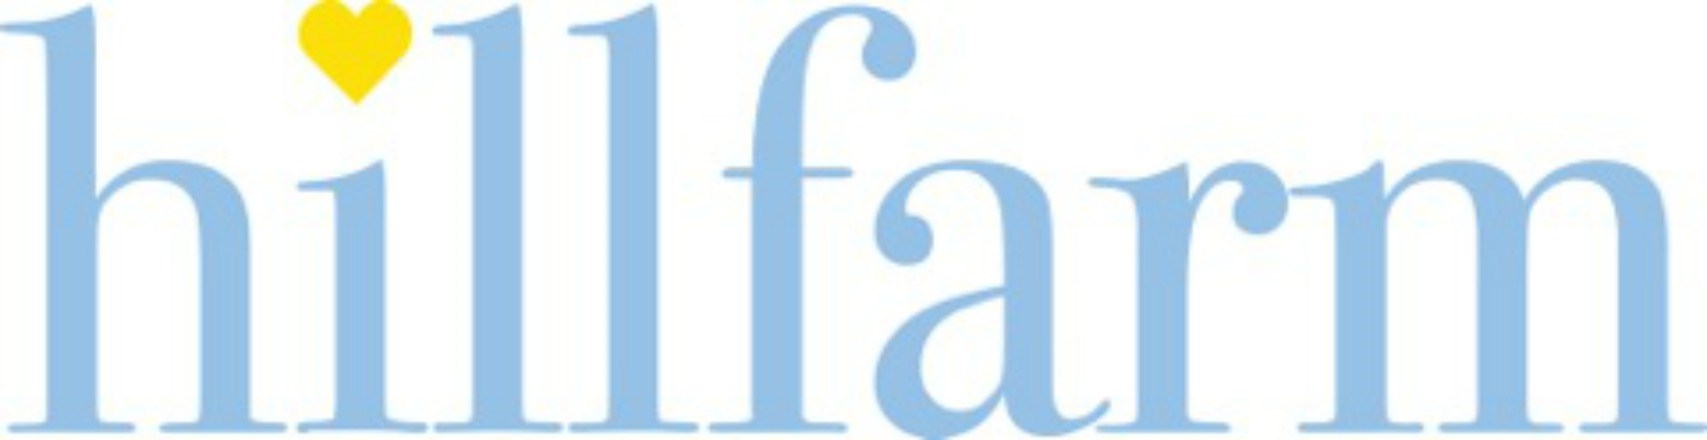 hillfarm oils logo